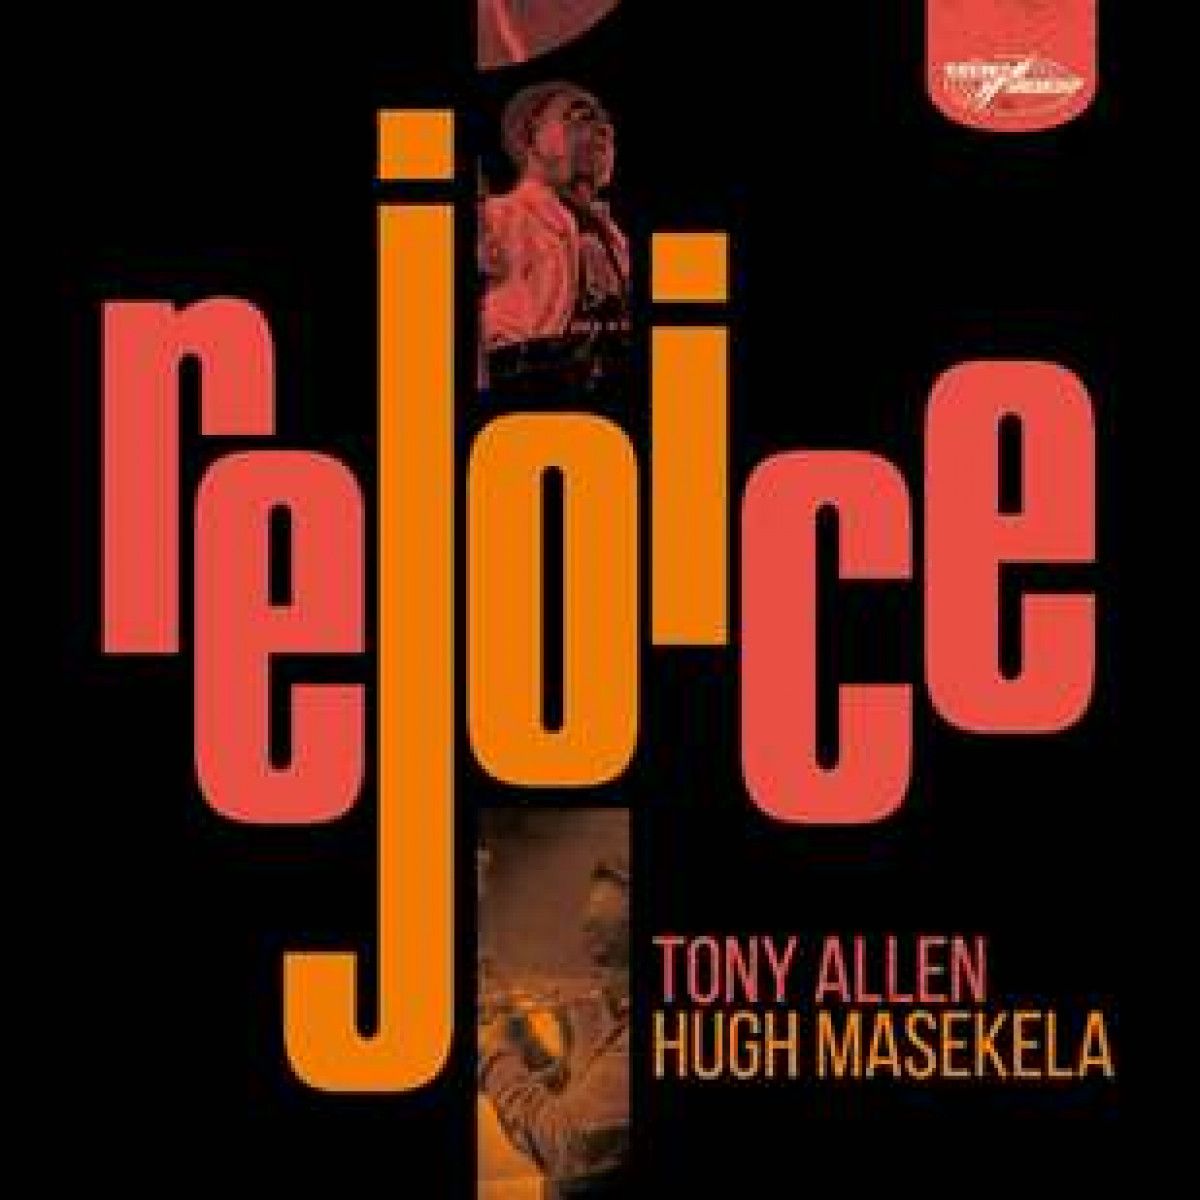 Tony Allen & Hugh Masekela - Rejoice - 2LP